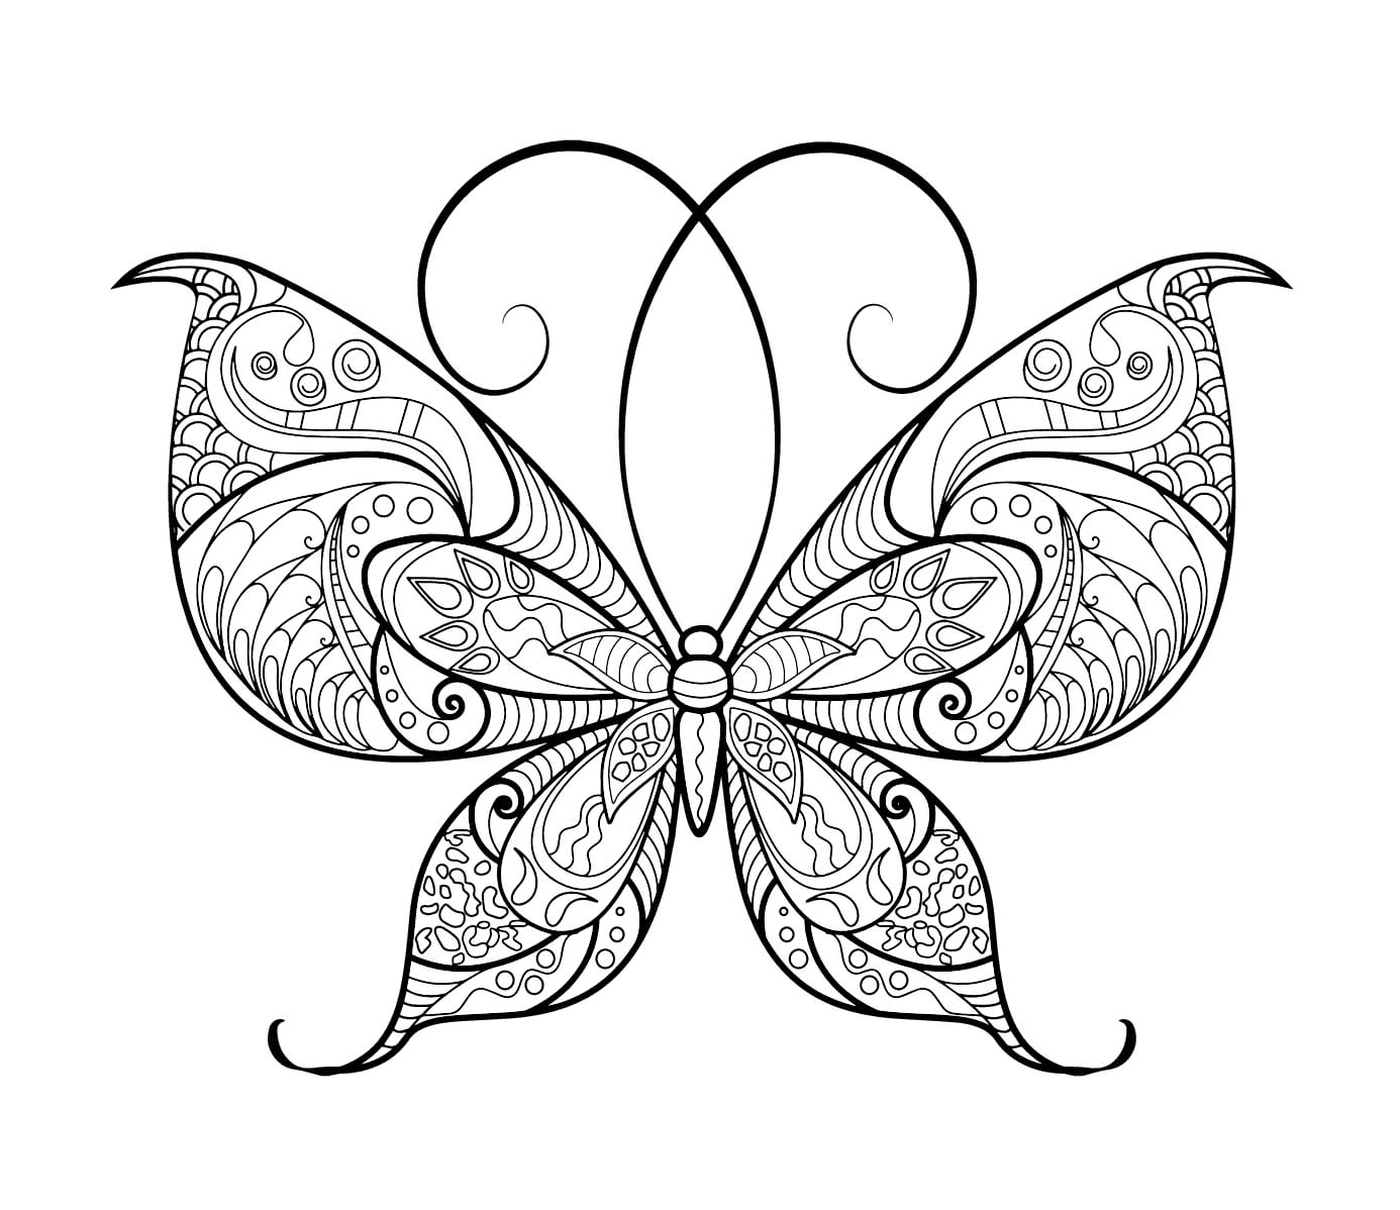  Una farfalla 